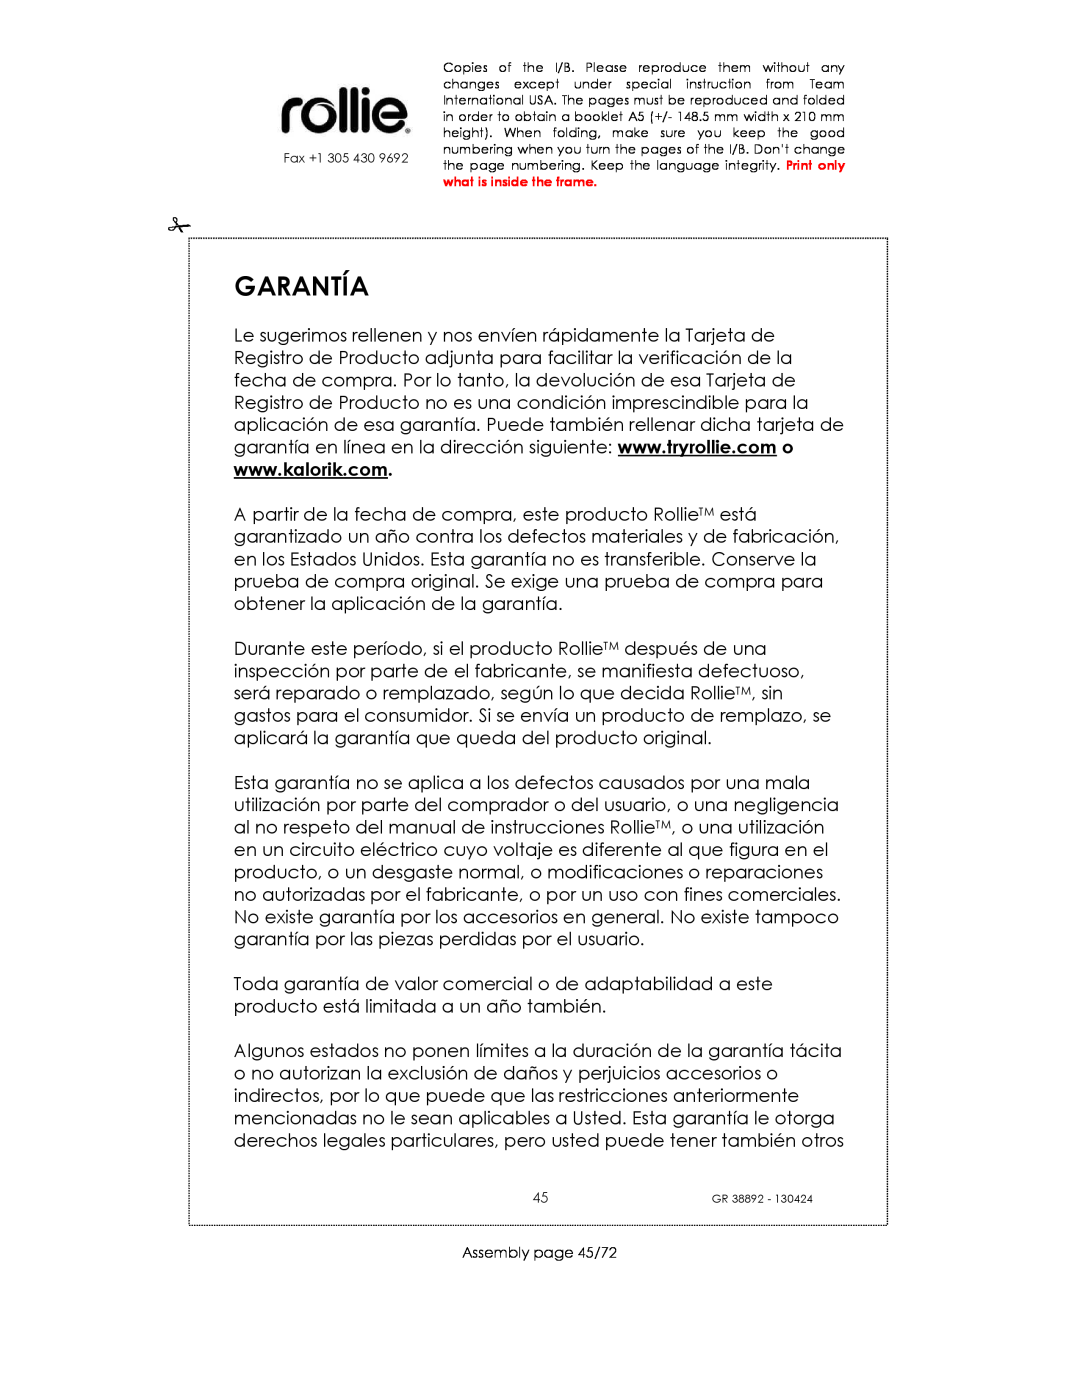 Kalorik GR38892 manual Garantía, Assembly page 45/72 